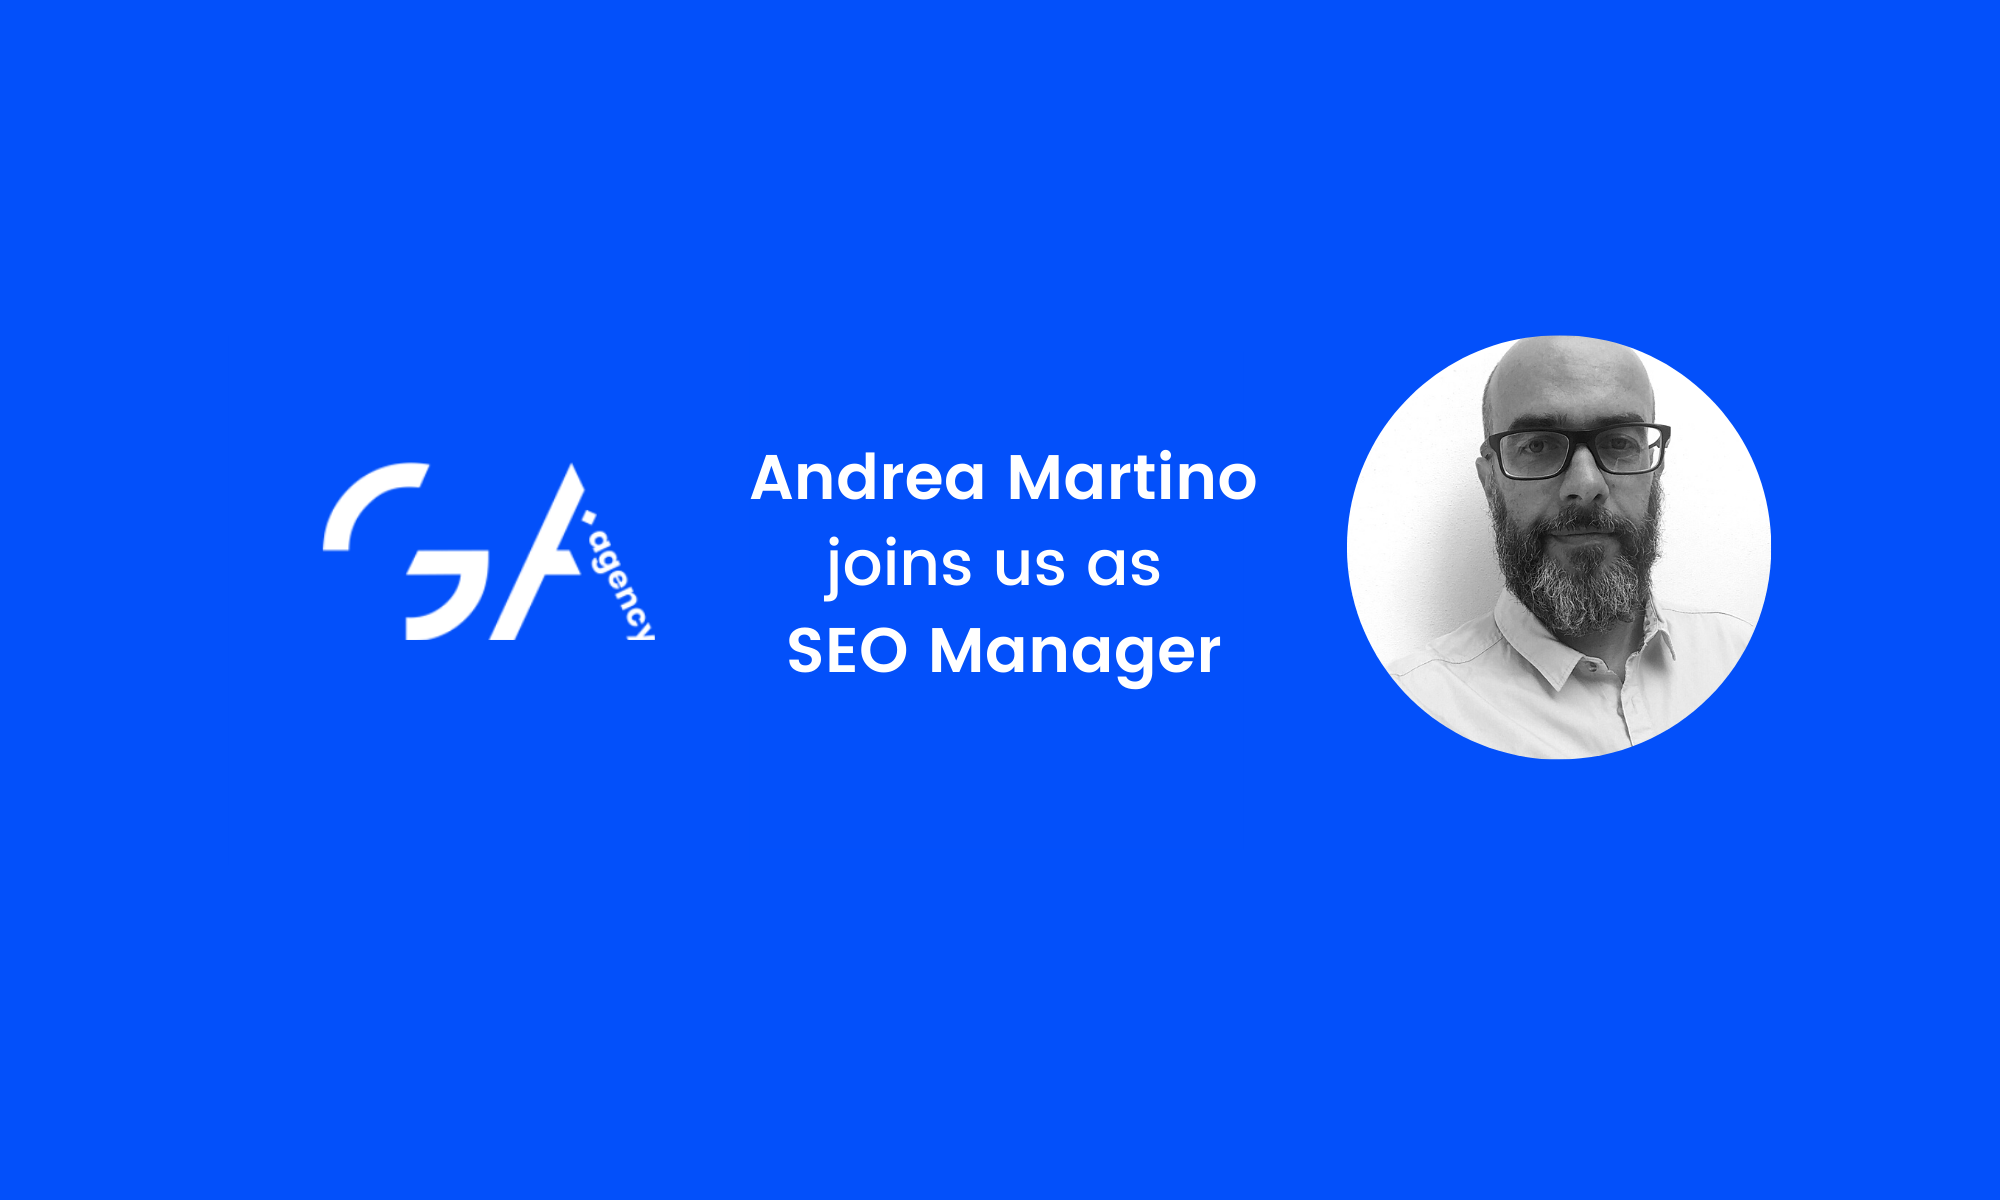 Andrea Martino Joins GA Agency as SEO Manager